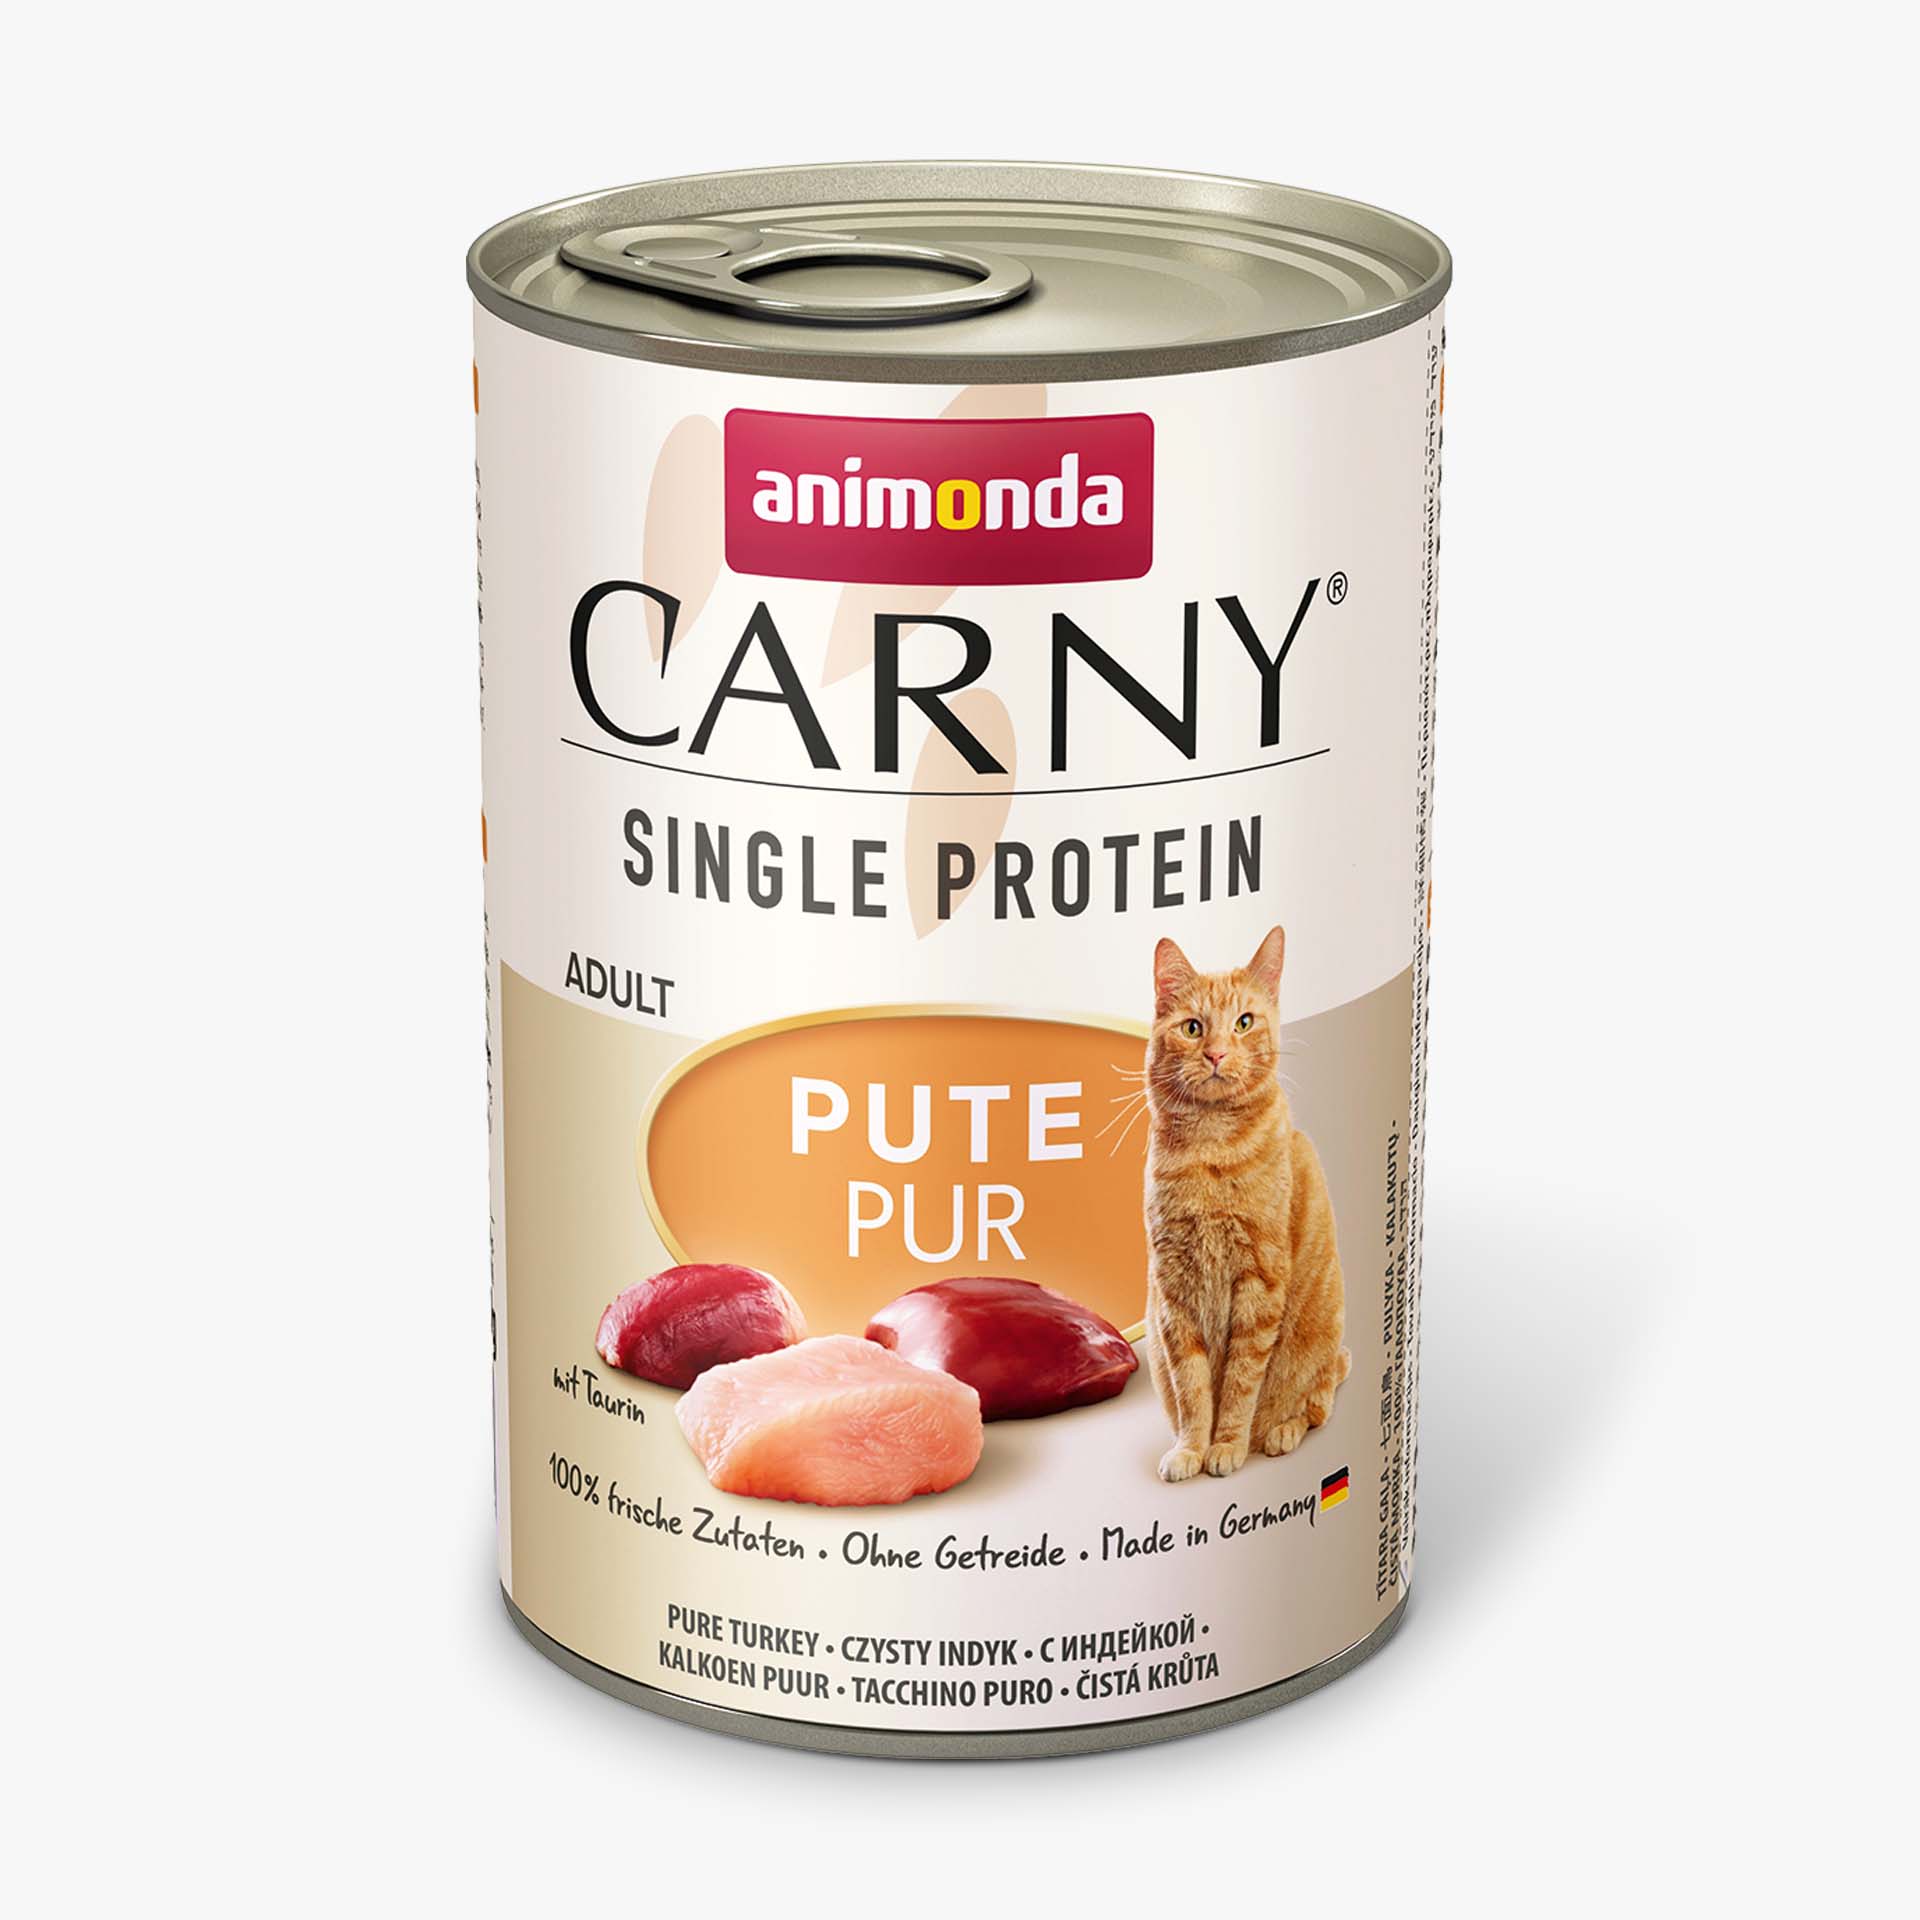 Carny pure turkey Single Protein